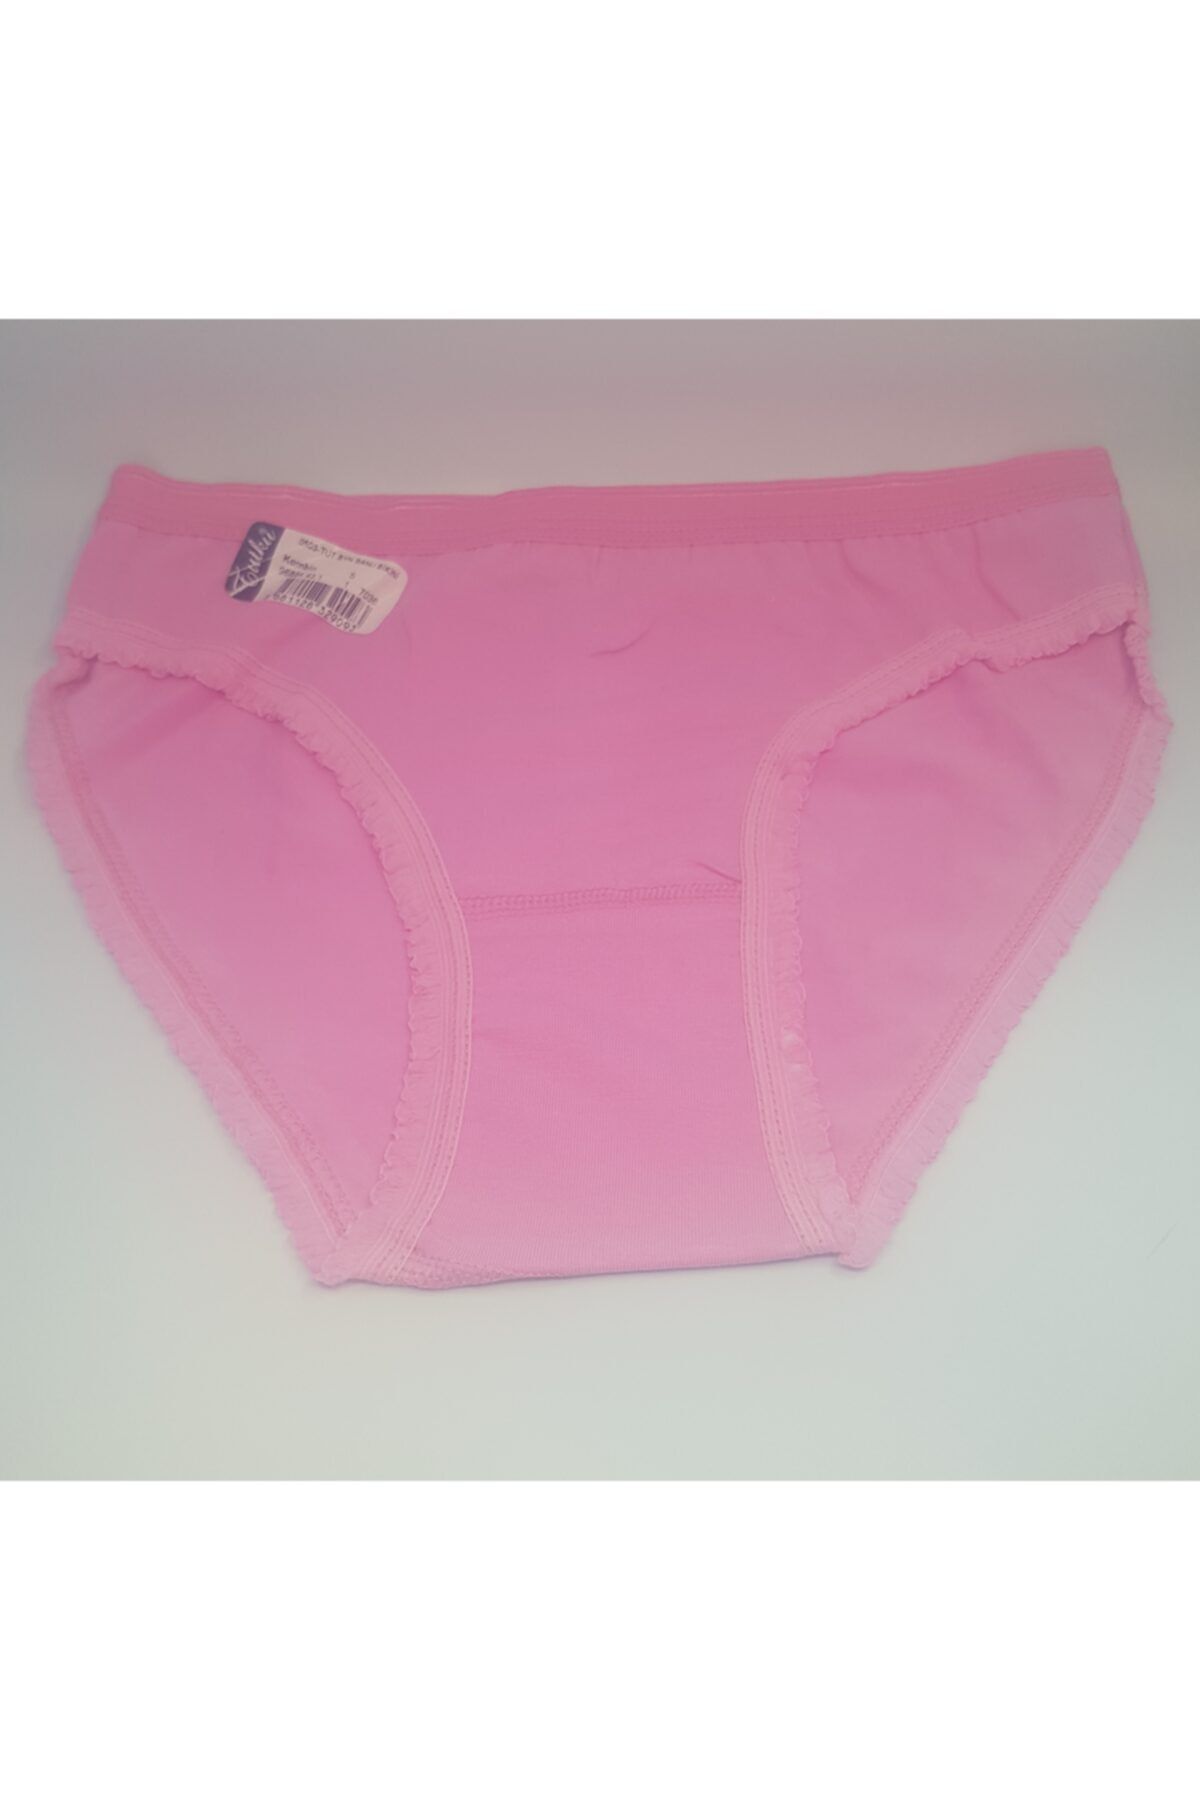 Tutku Pembe Kadın Banu Bikini Külot 6'lı Paket 503 Fua Shop